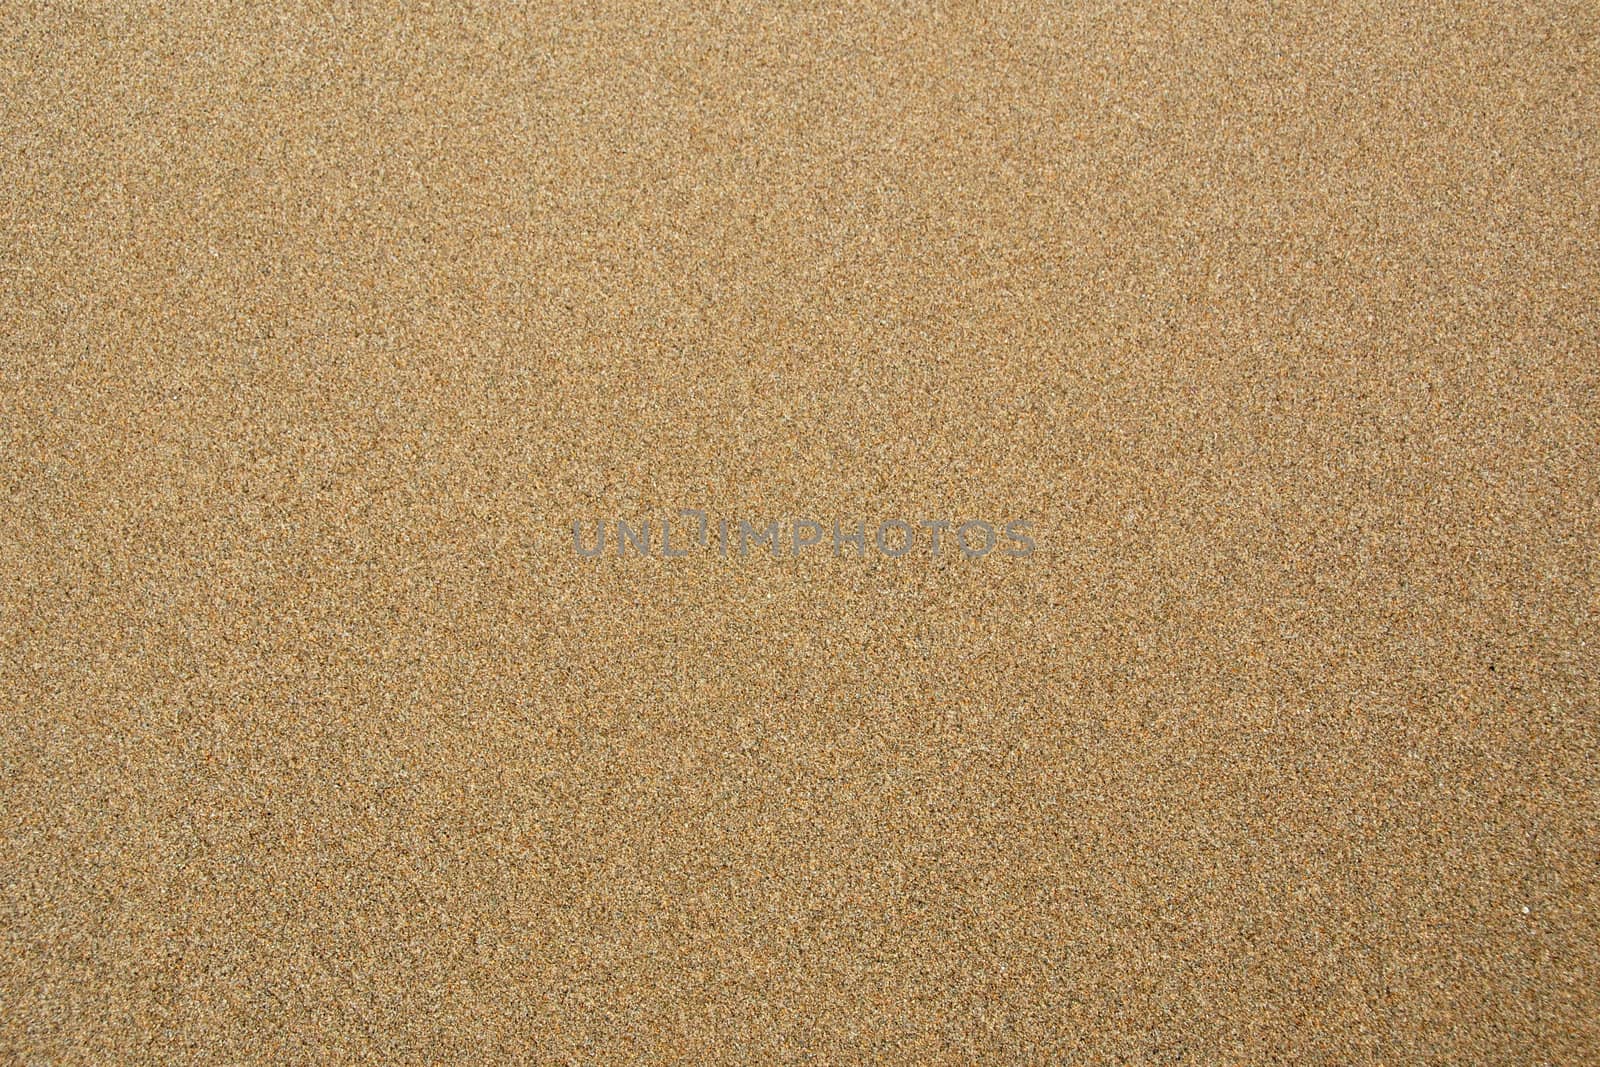 Sand texture or backround